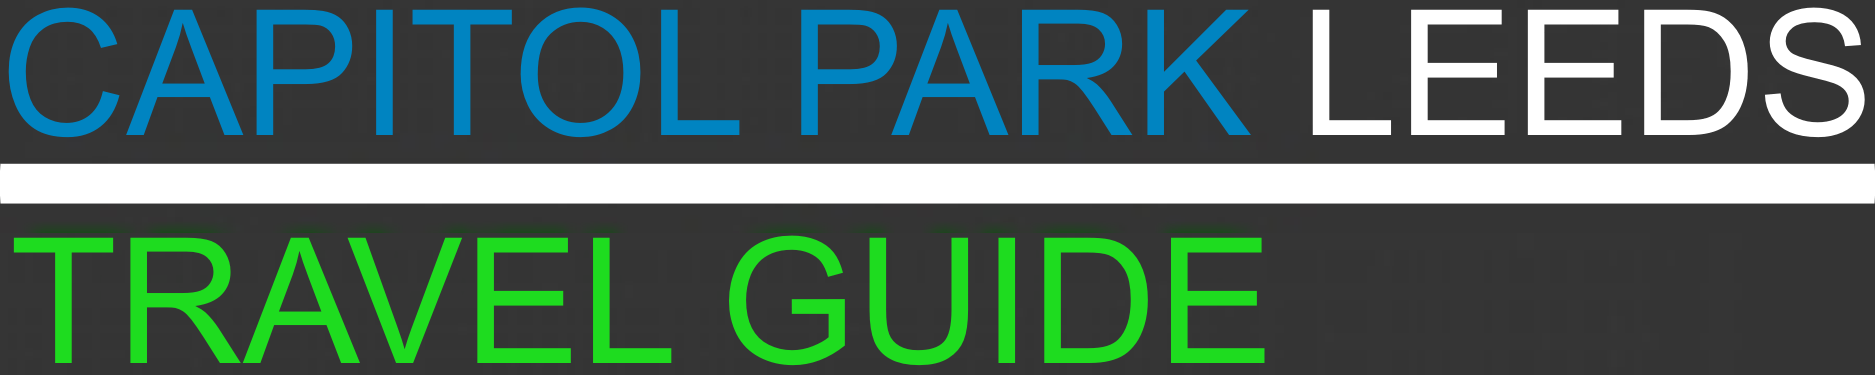 Capitol Park Leeds Travel Guide Logo